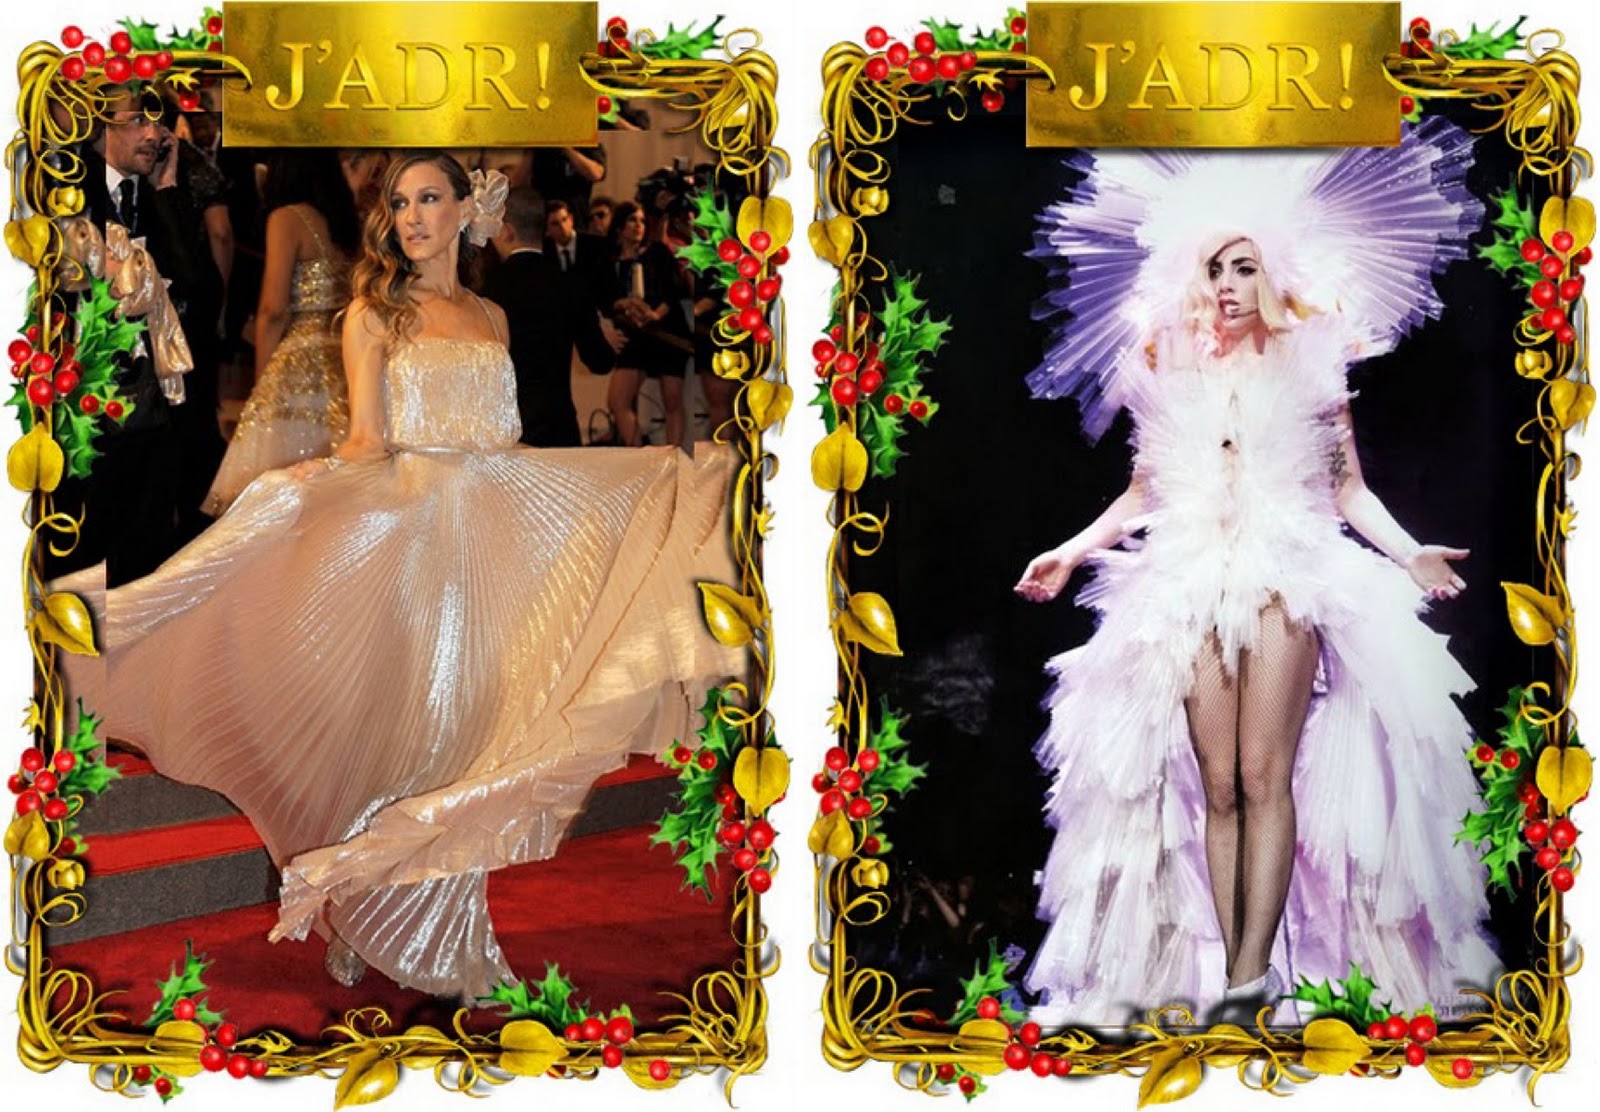 http://2.bp.blogspot.com/_PfmV3qvy8FY/TRJwYWZXArI/AAAAAAAAAk4/OMnhNFrEOg4/s1600/la+modella+mafia+9.+Sarah+Jessica+Parker+in+Halston+10.+Lady+Gaga+in+The+House+of+Gaga+10+BEST+DRESSED+of+the+Year+via+annadellorusso.jpg